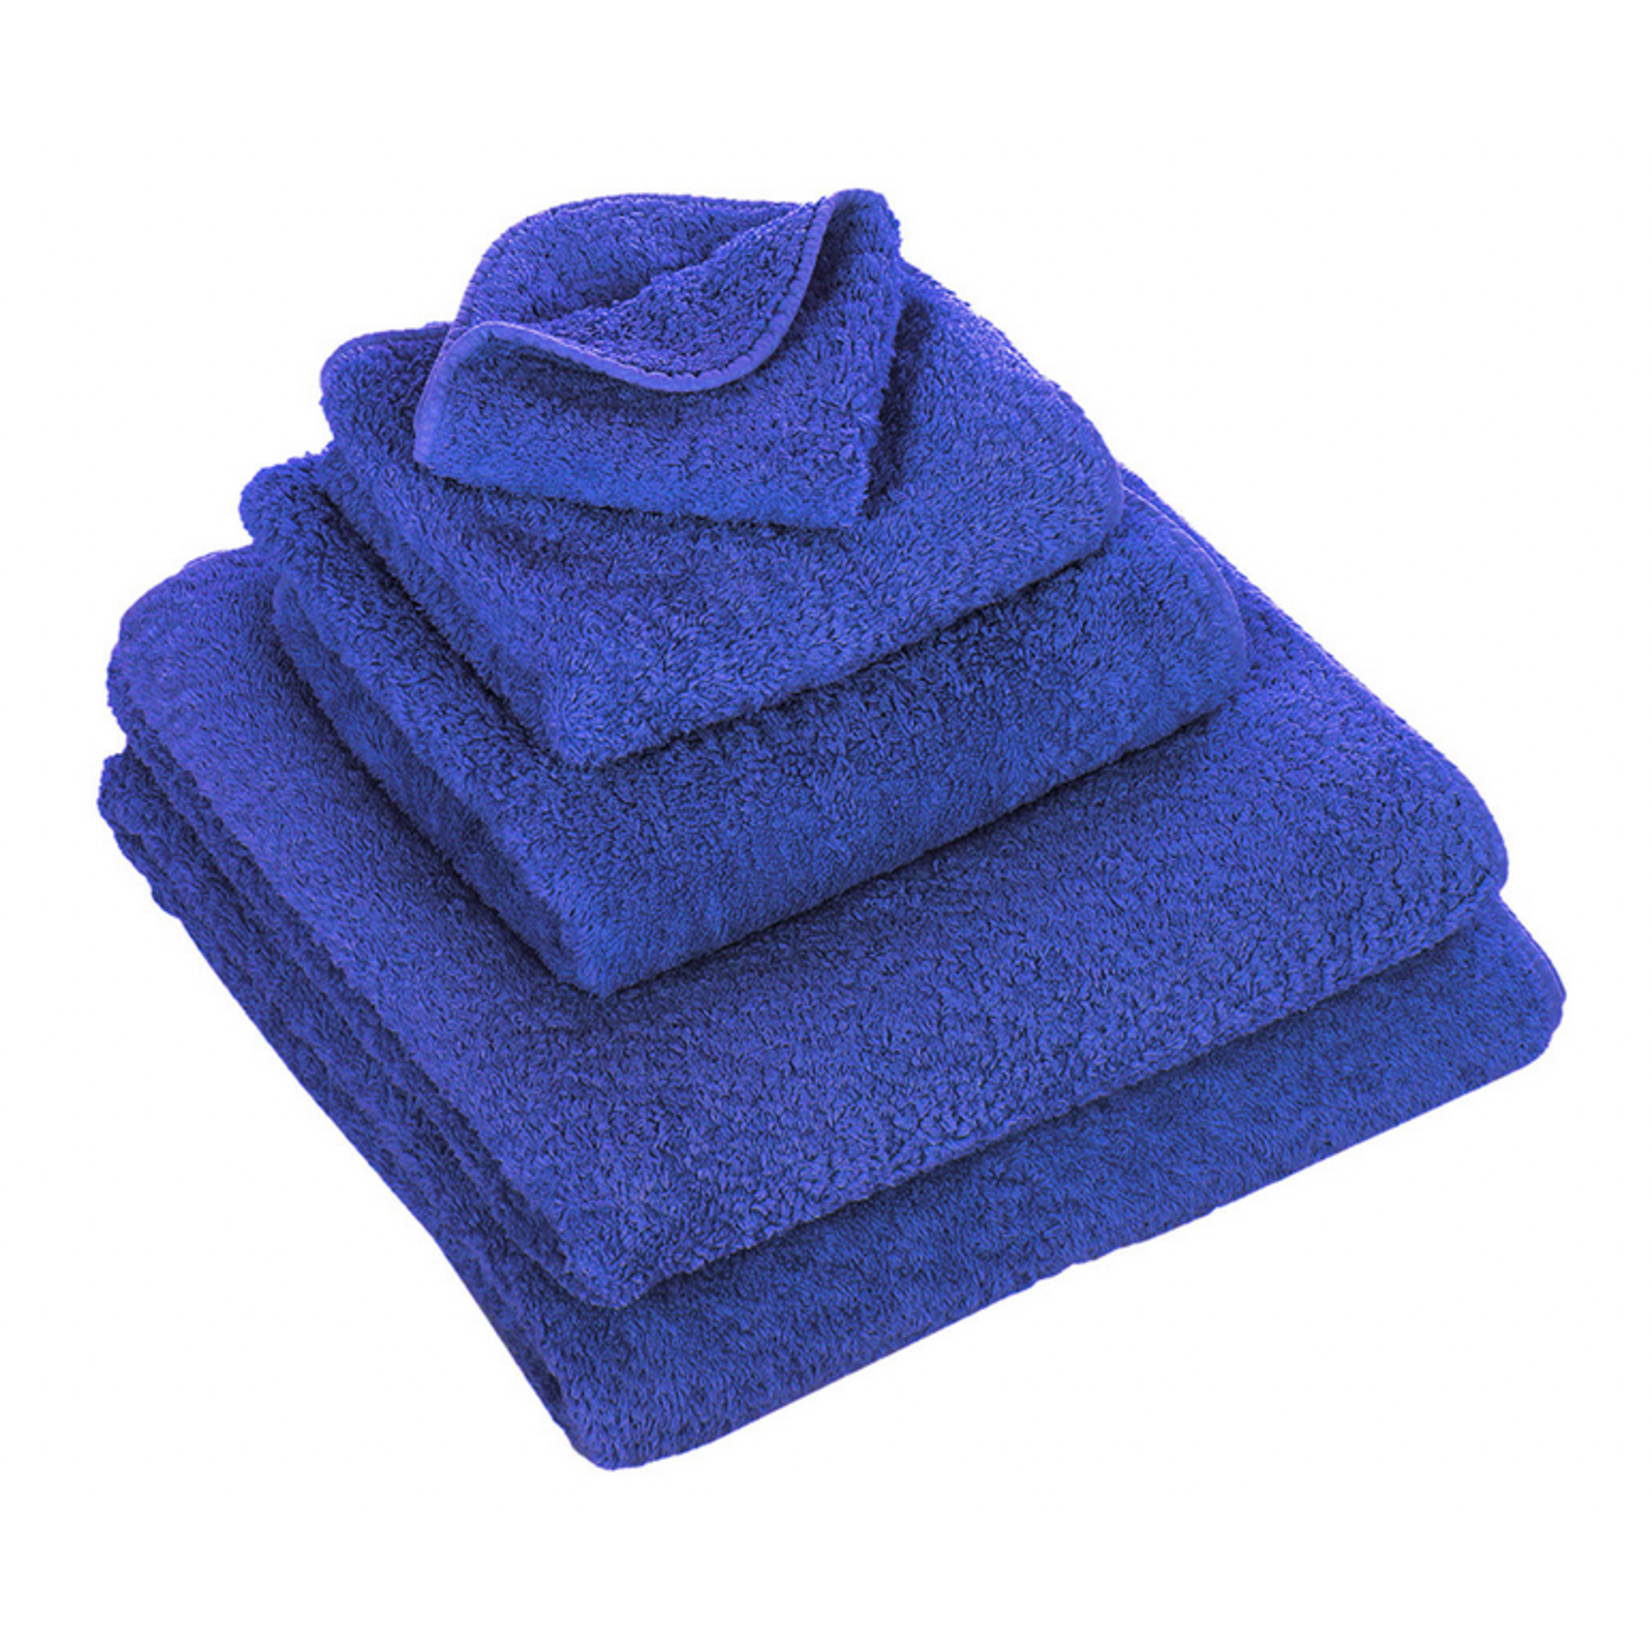 St. Geneve Super Pile Bath Towel 100% Egyptian Cotton, 304 Marina